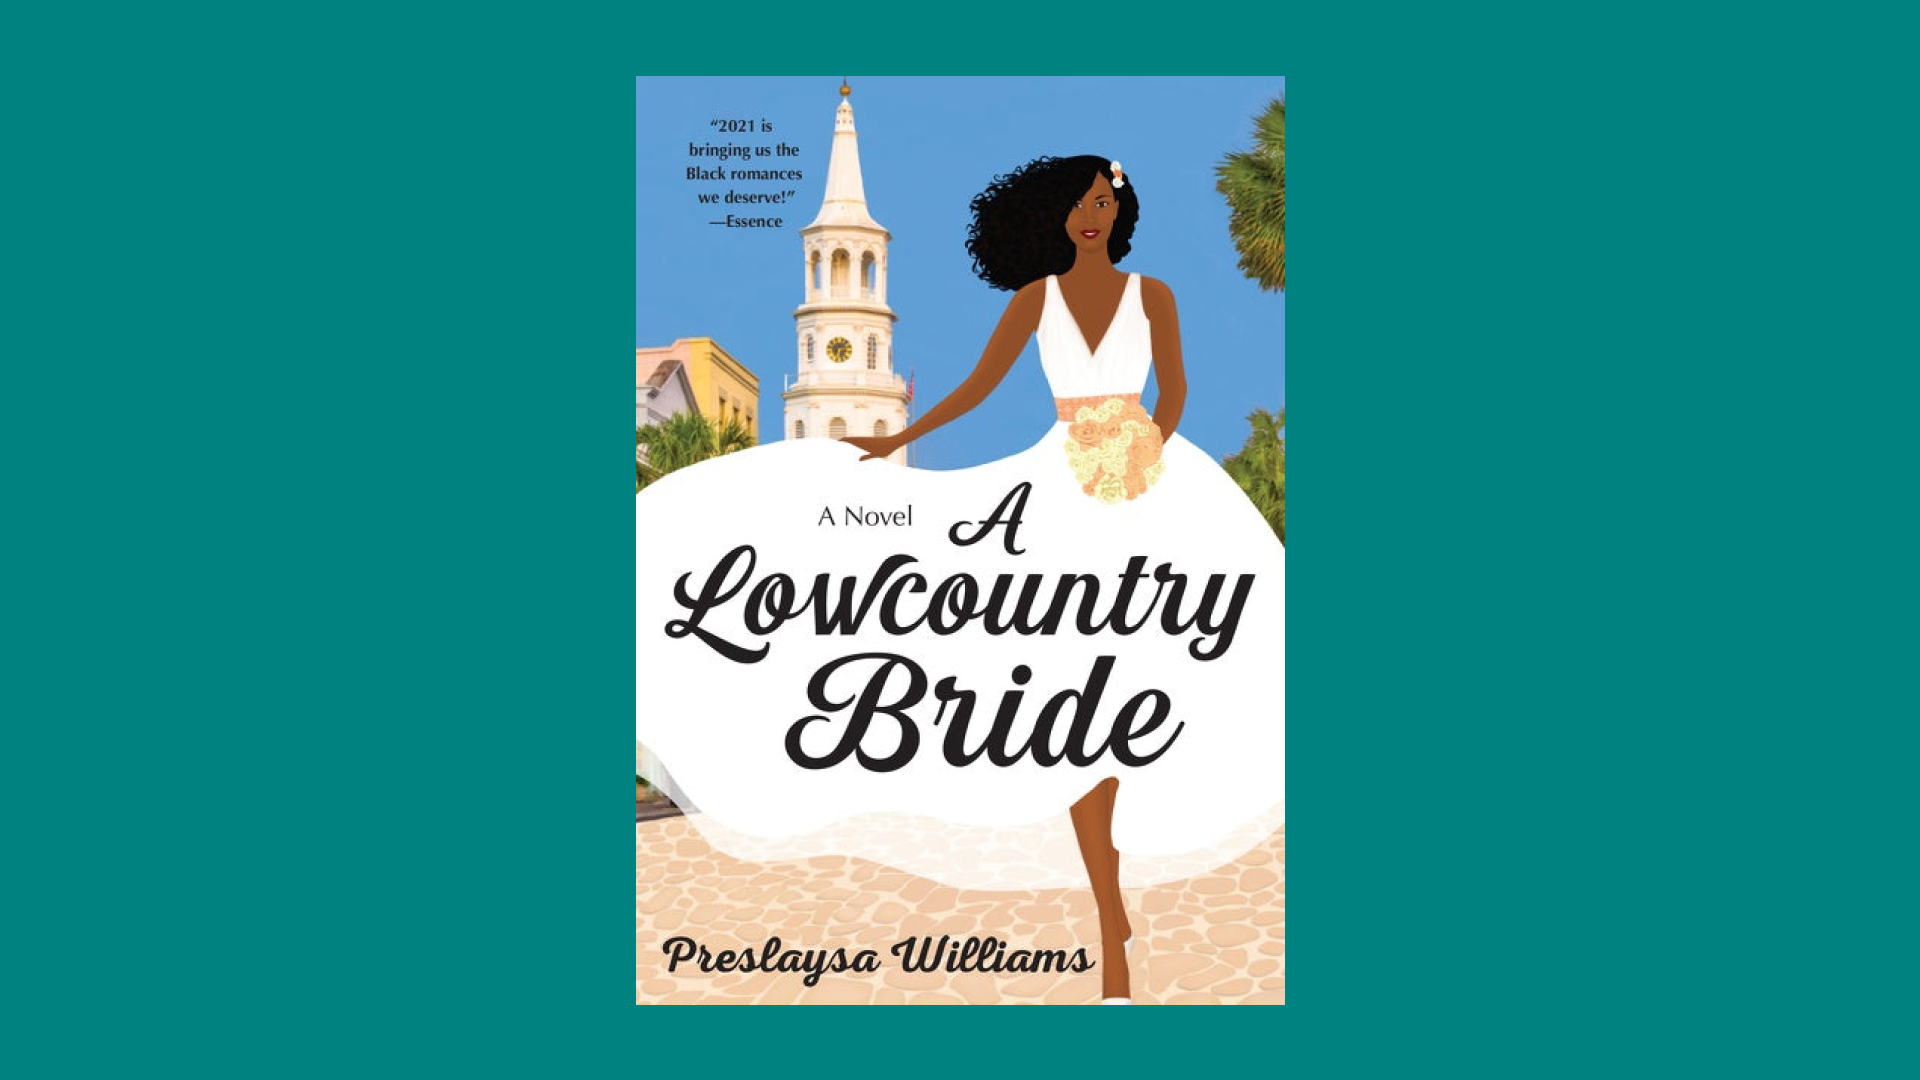 “A Lowcountry Bride” by Preslaysa Williams